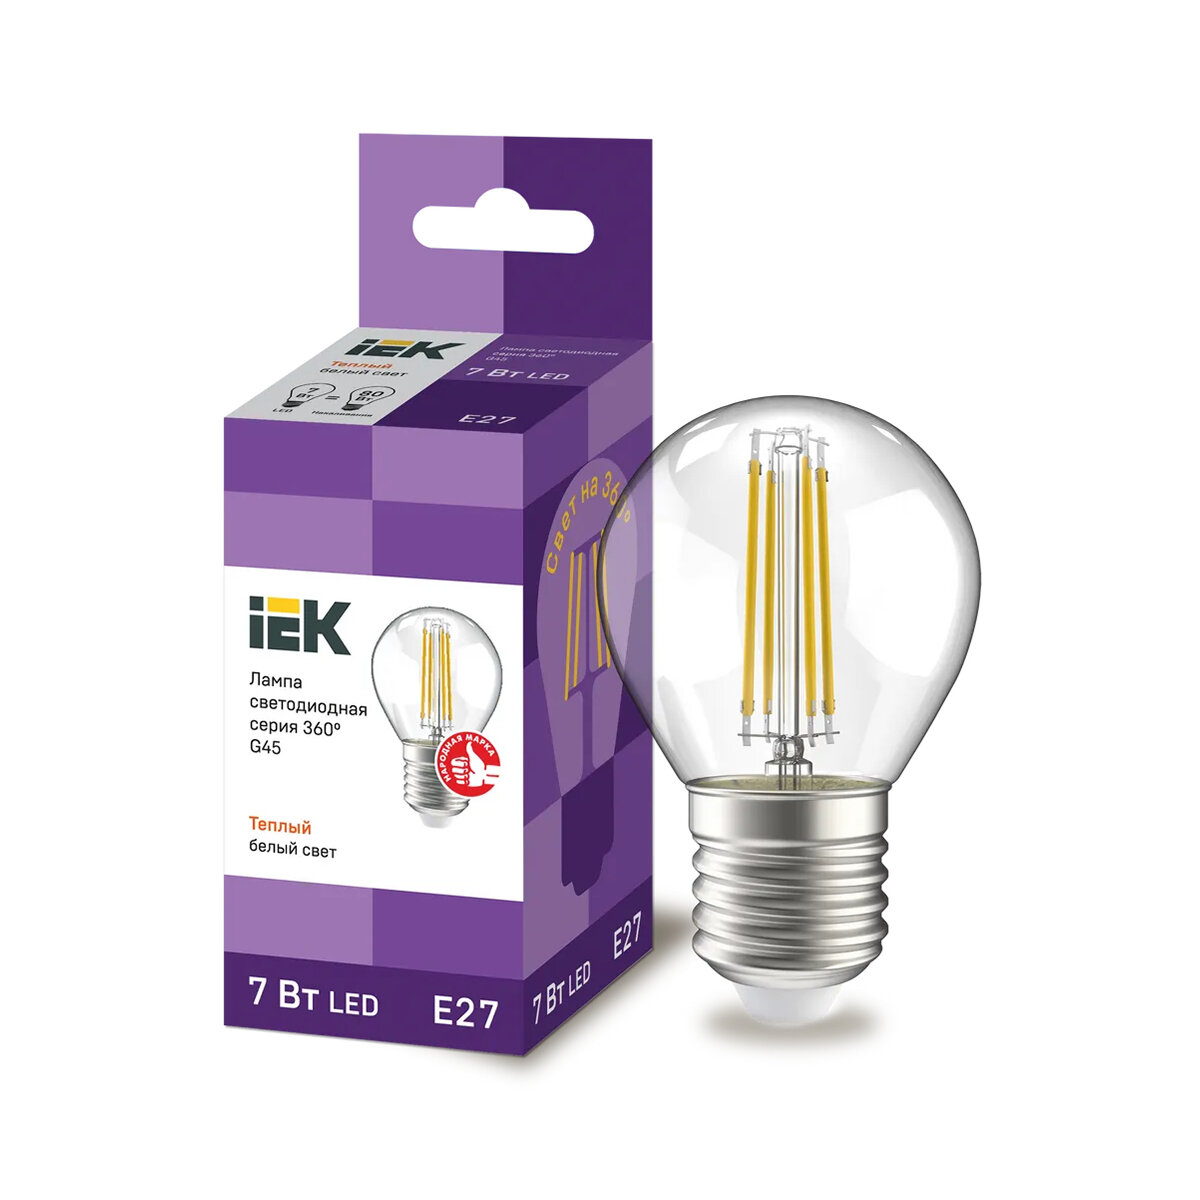 Лампа светодиодная LED IEK Шар, серия 360°, E27, G45, 7 Вт, 3000 K, теплый свет